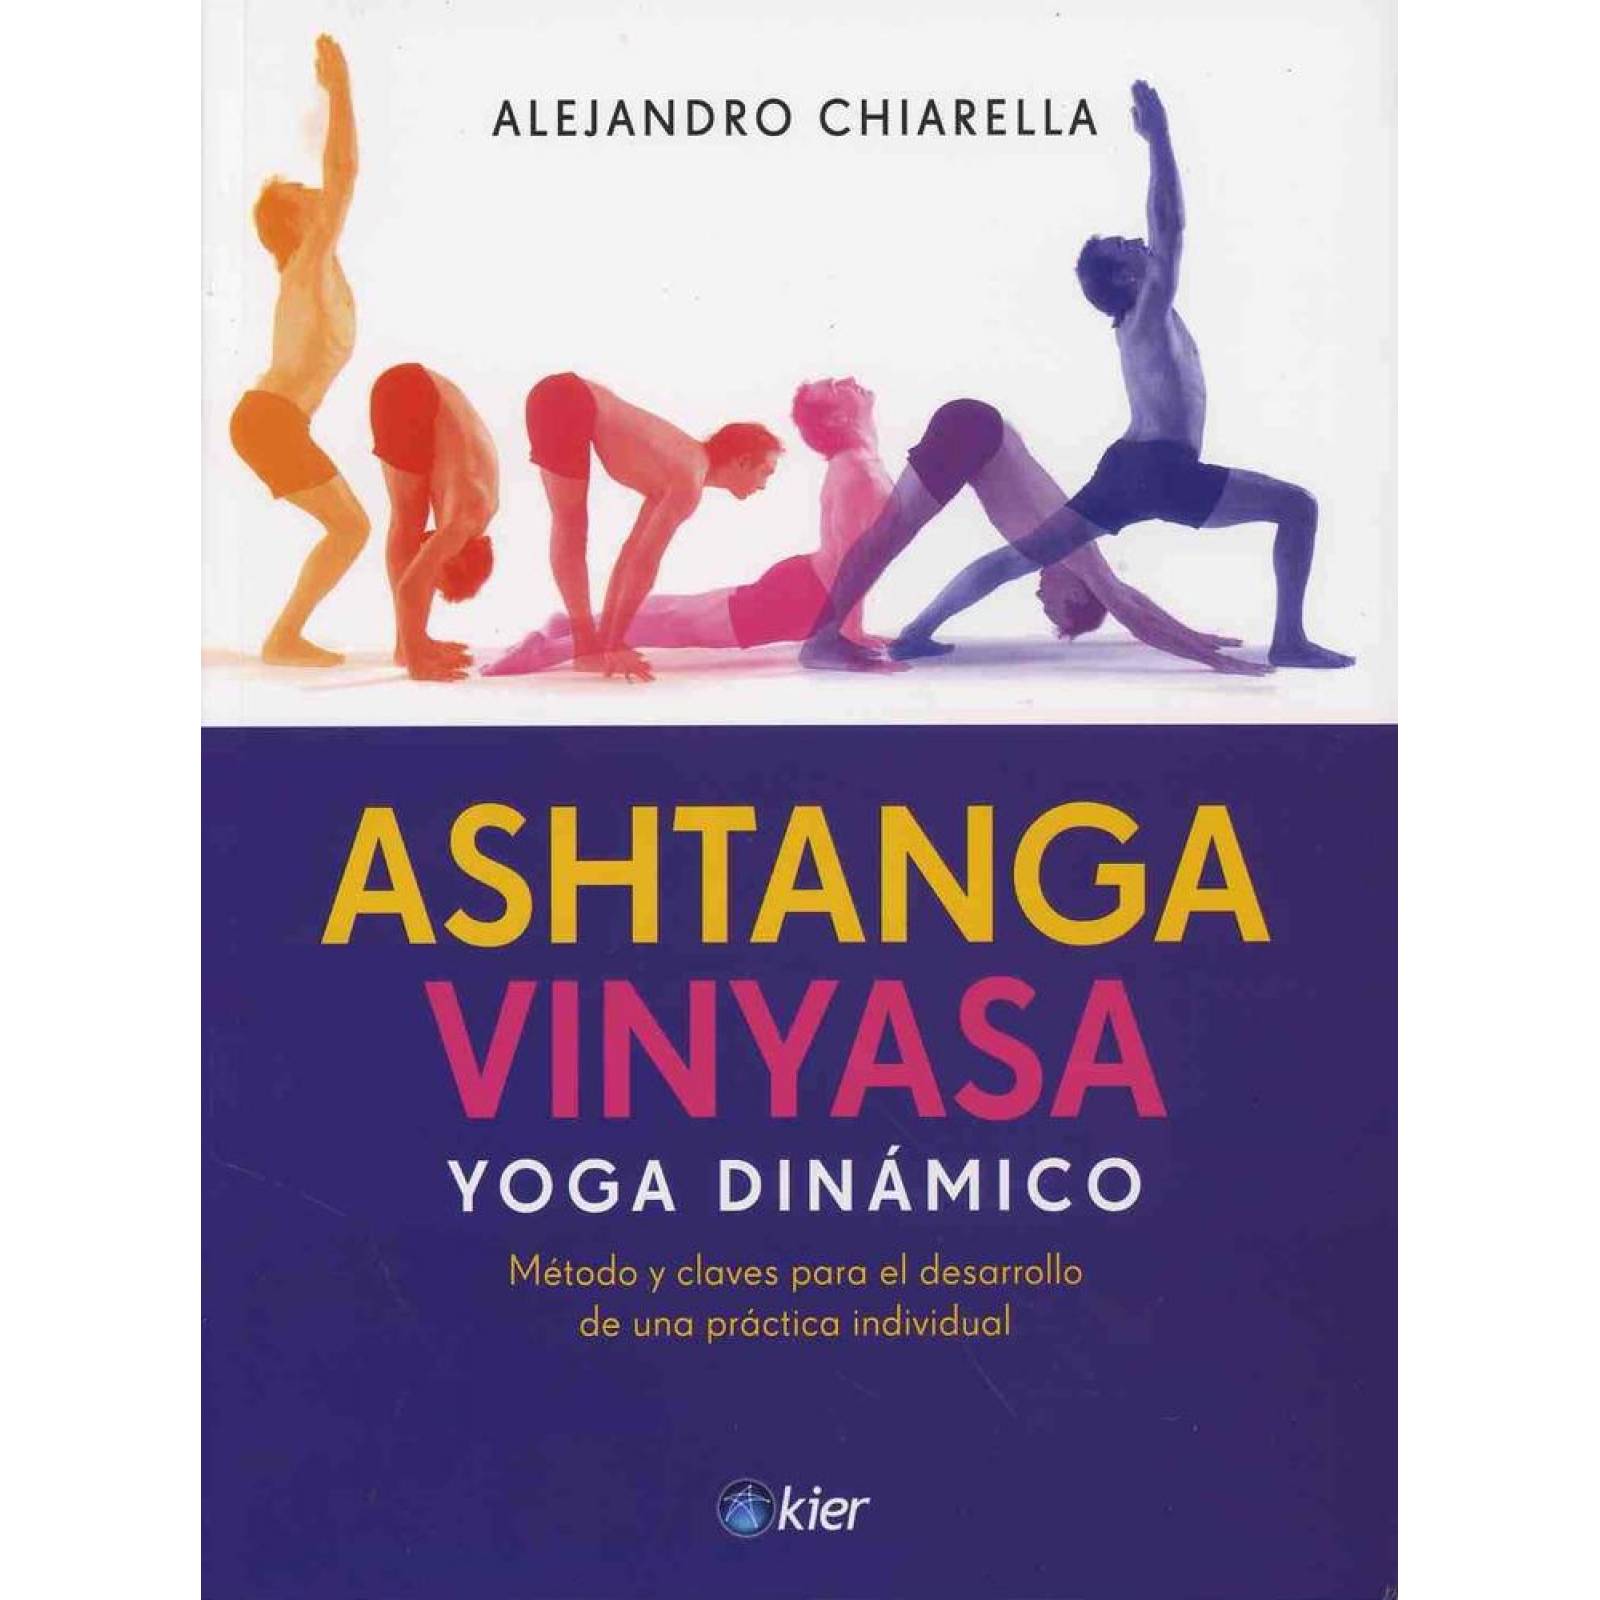 Ashtanga Vinyasa. Yoga dinámico. 2a ed. 